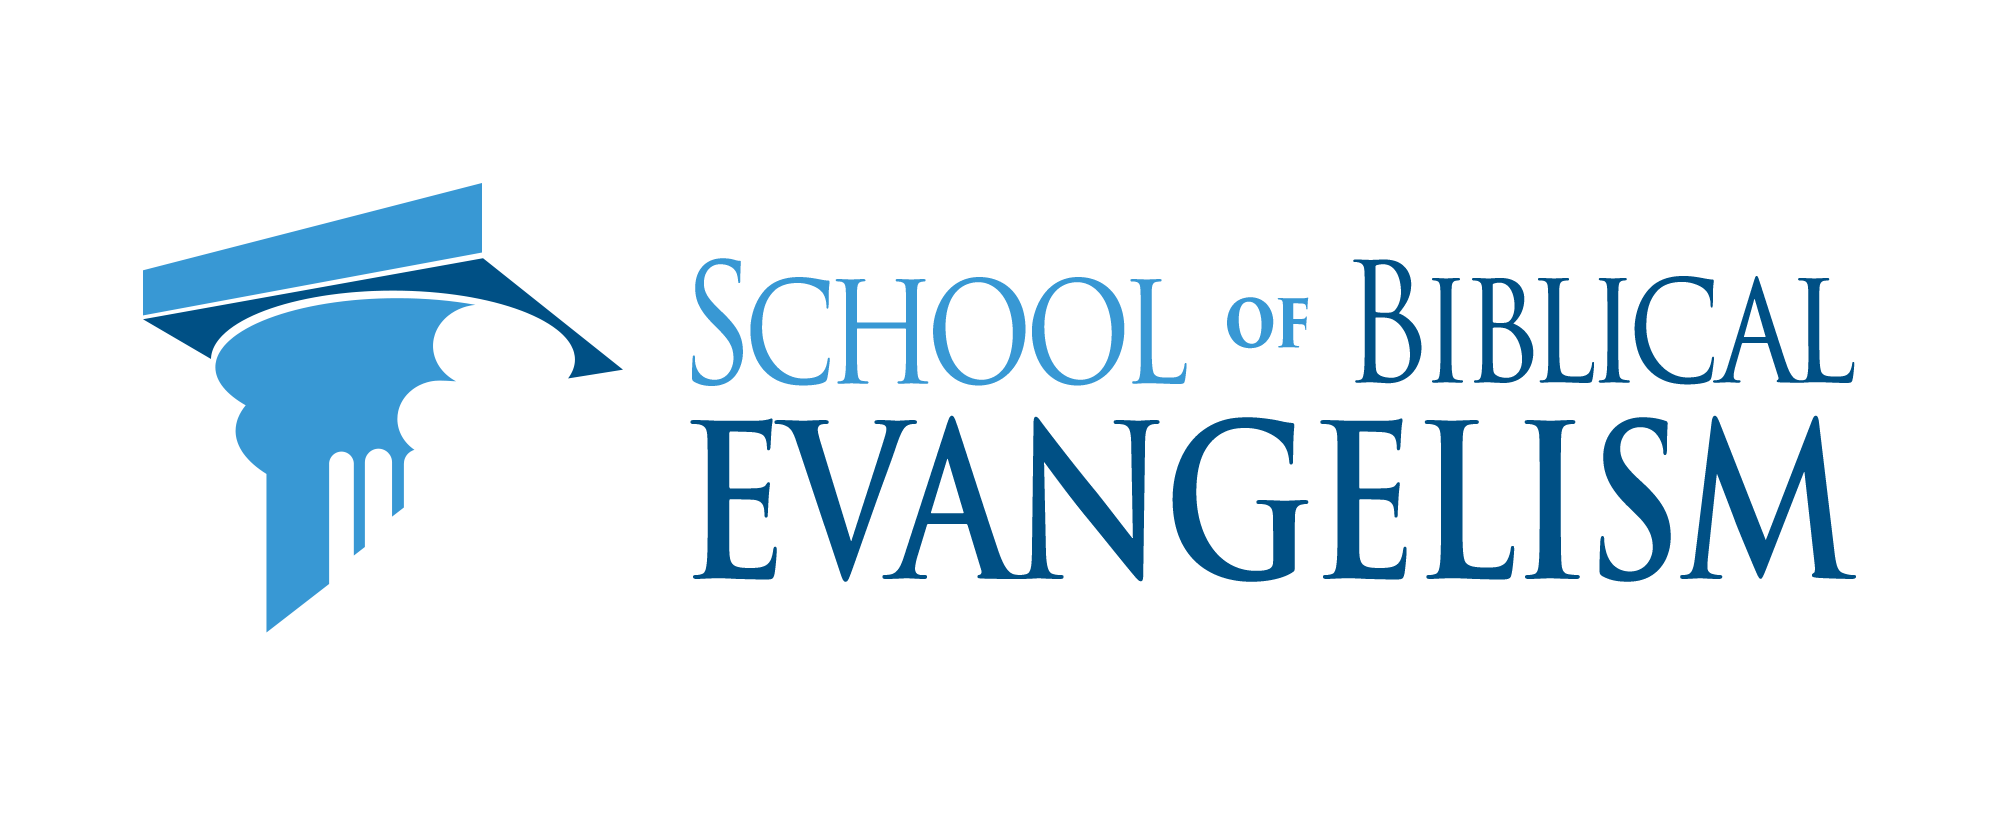 Evangelism Logo - Online School of Biblical Evangelism - Training